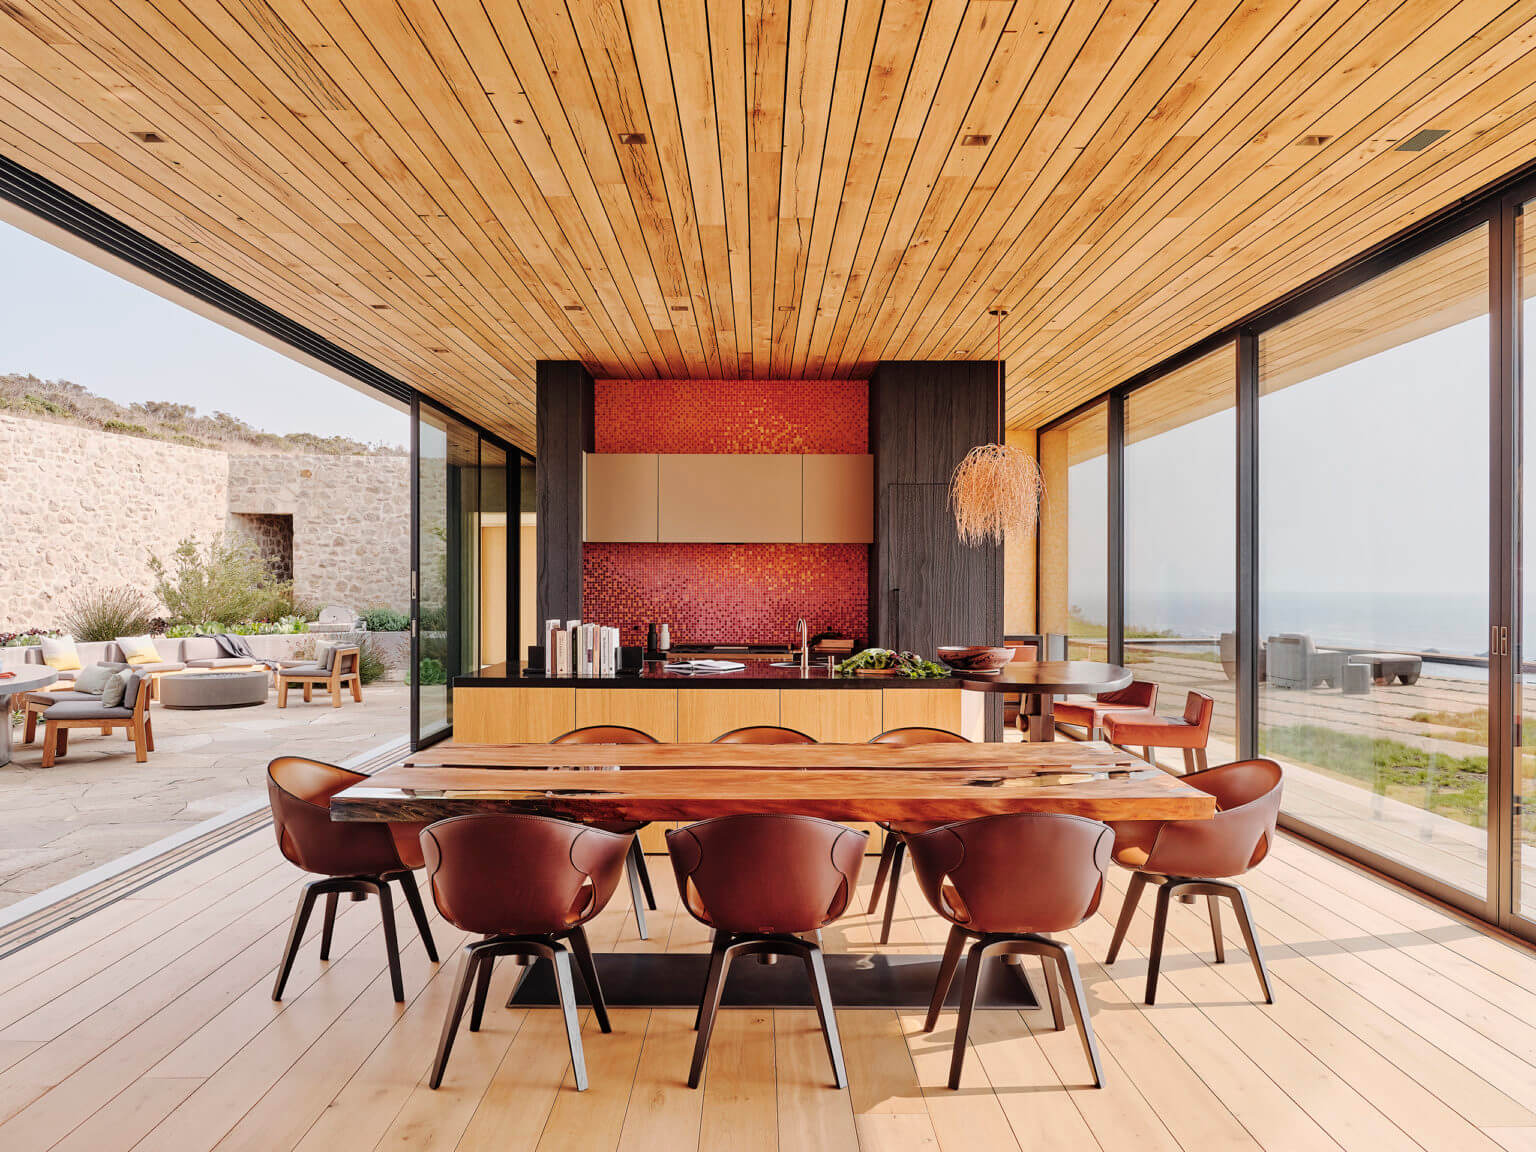 dining furniture under wood paneled ceiling